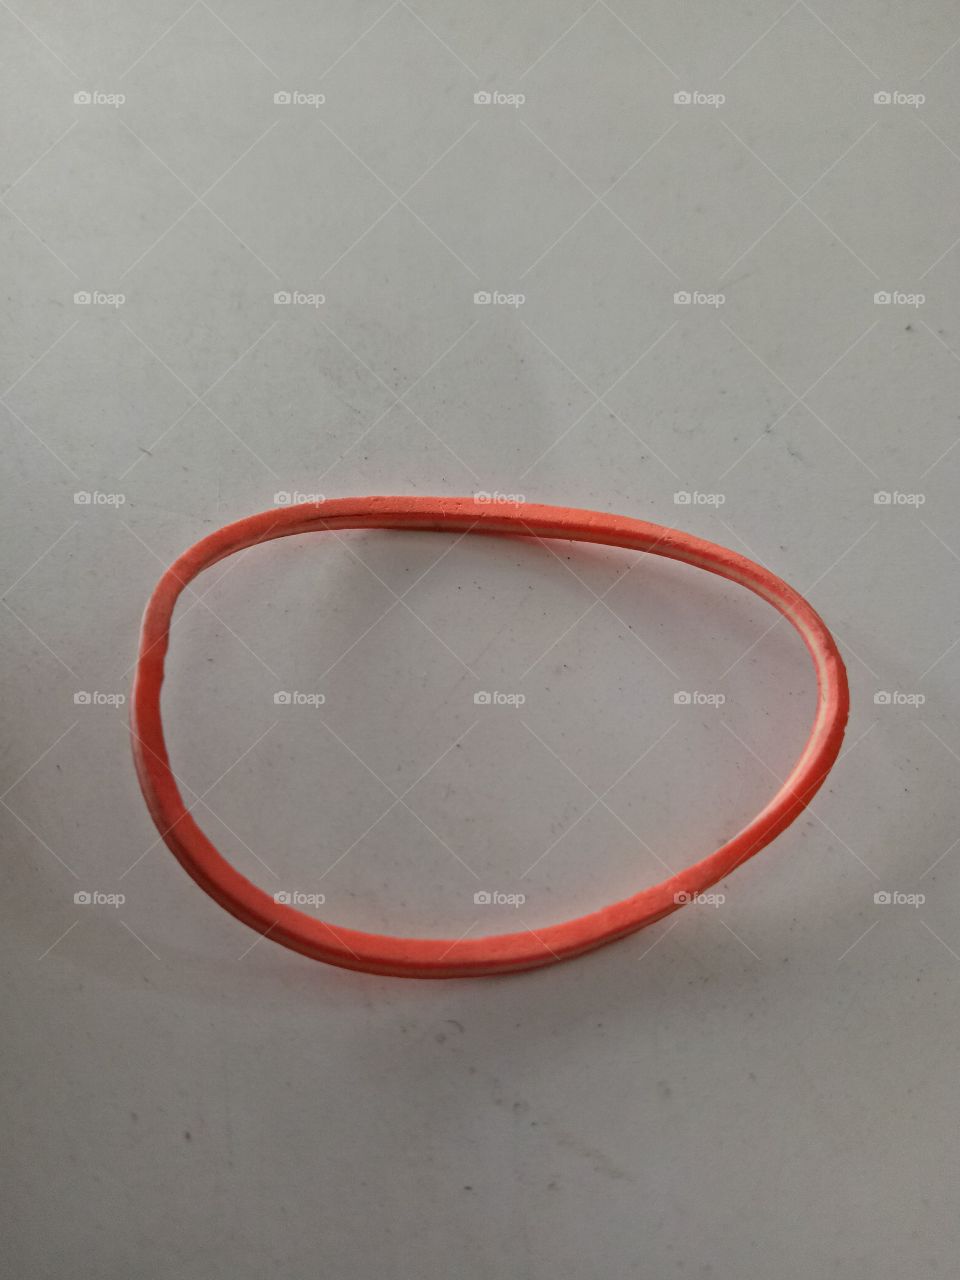 Orange rubber band